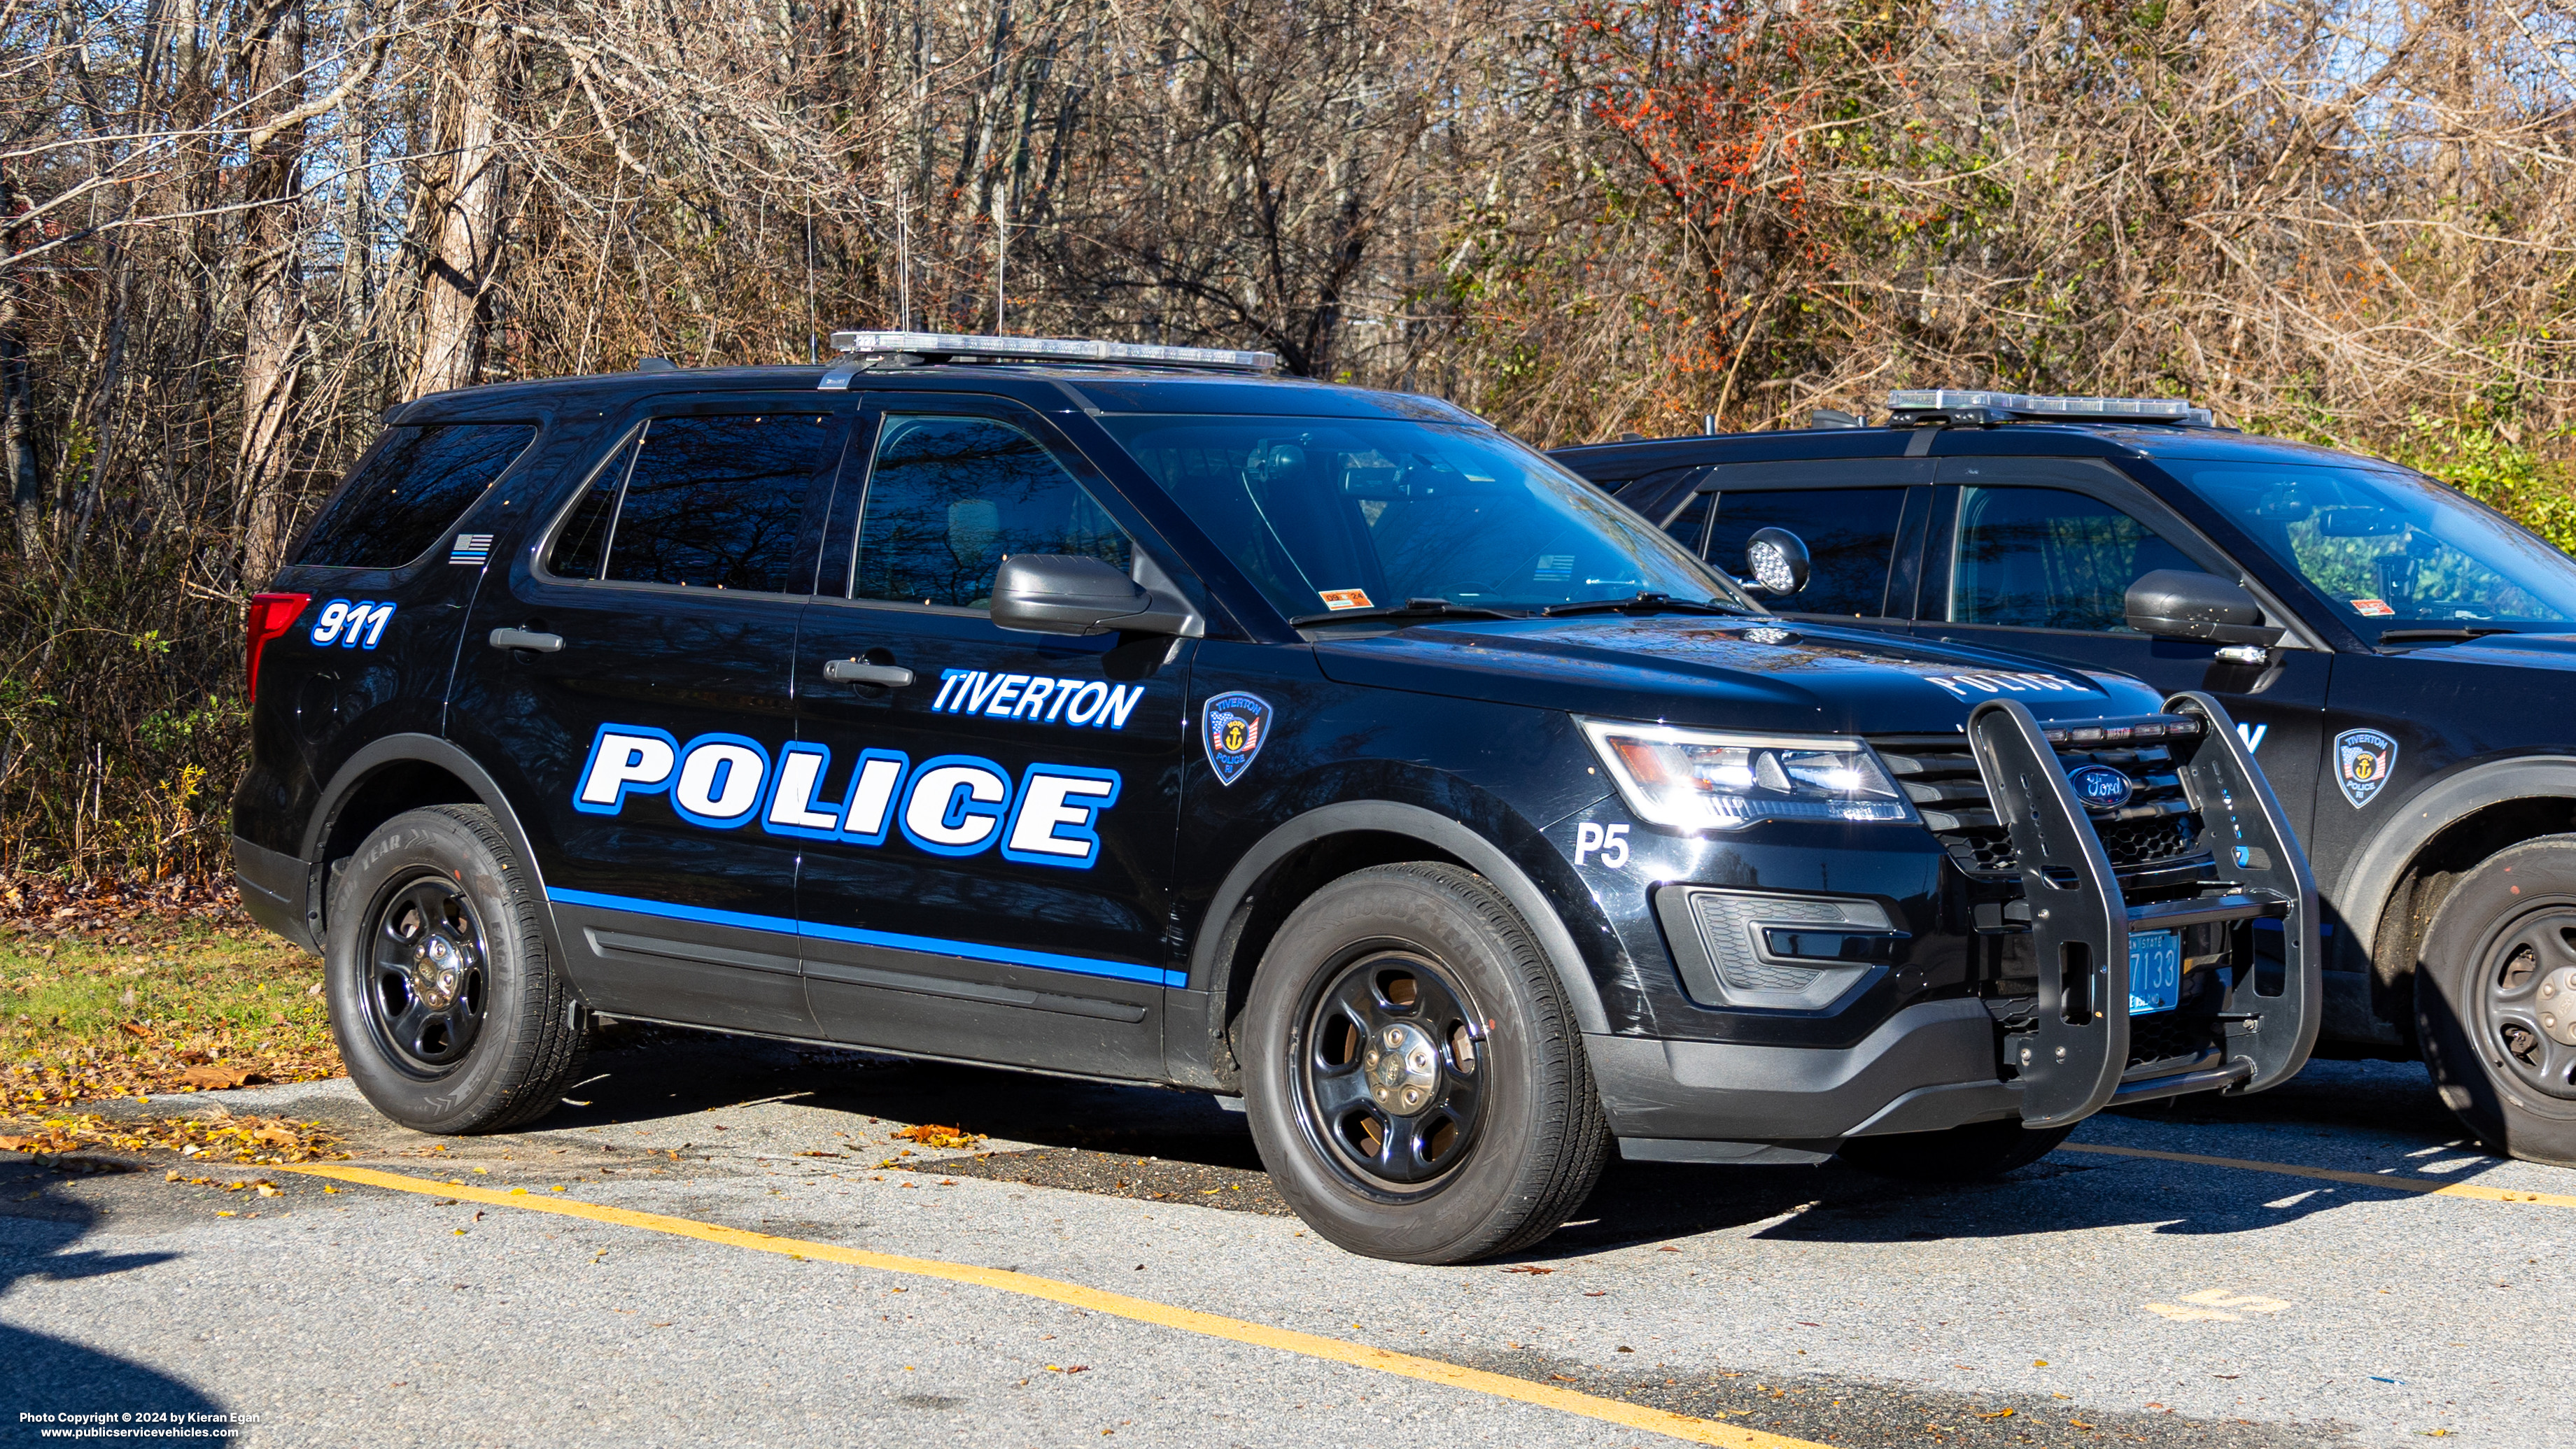 A photo  of Tiverton Police
            Cruiser P5, a 2019 Ford Police Interceptor Utility             taken by Kieran Egan